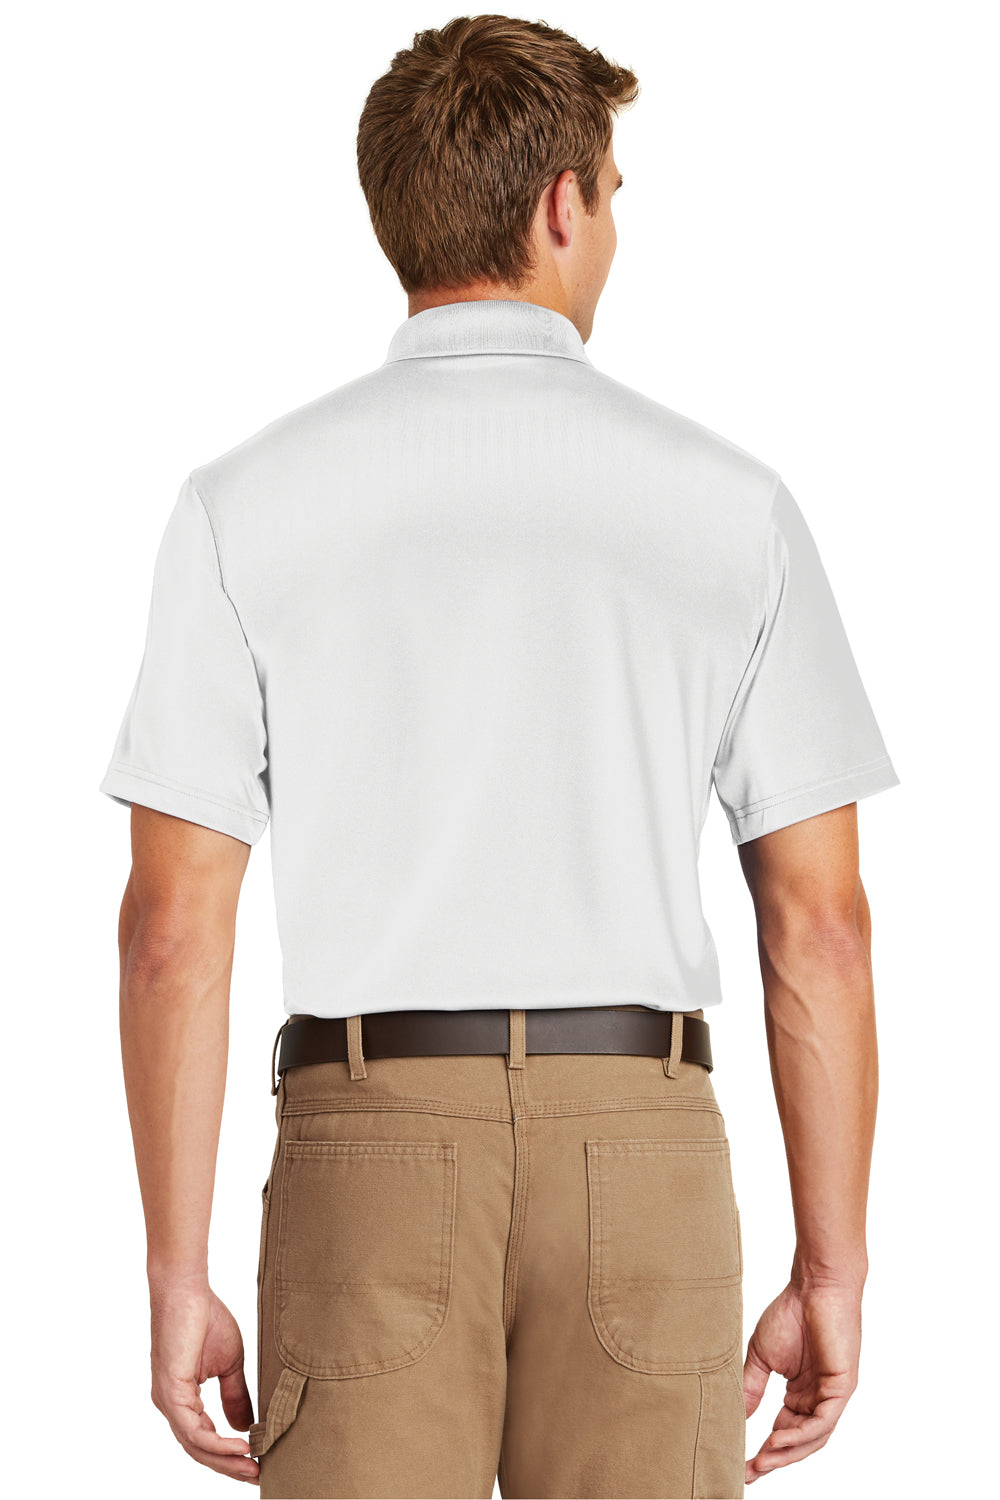 CornerStone CS412 Mens Select Moisture Wicking Short Sleeve Polo Shirt White Back